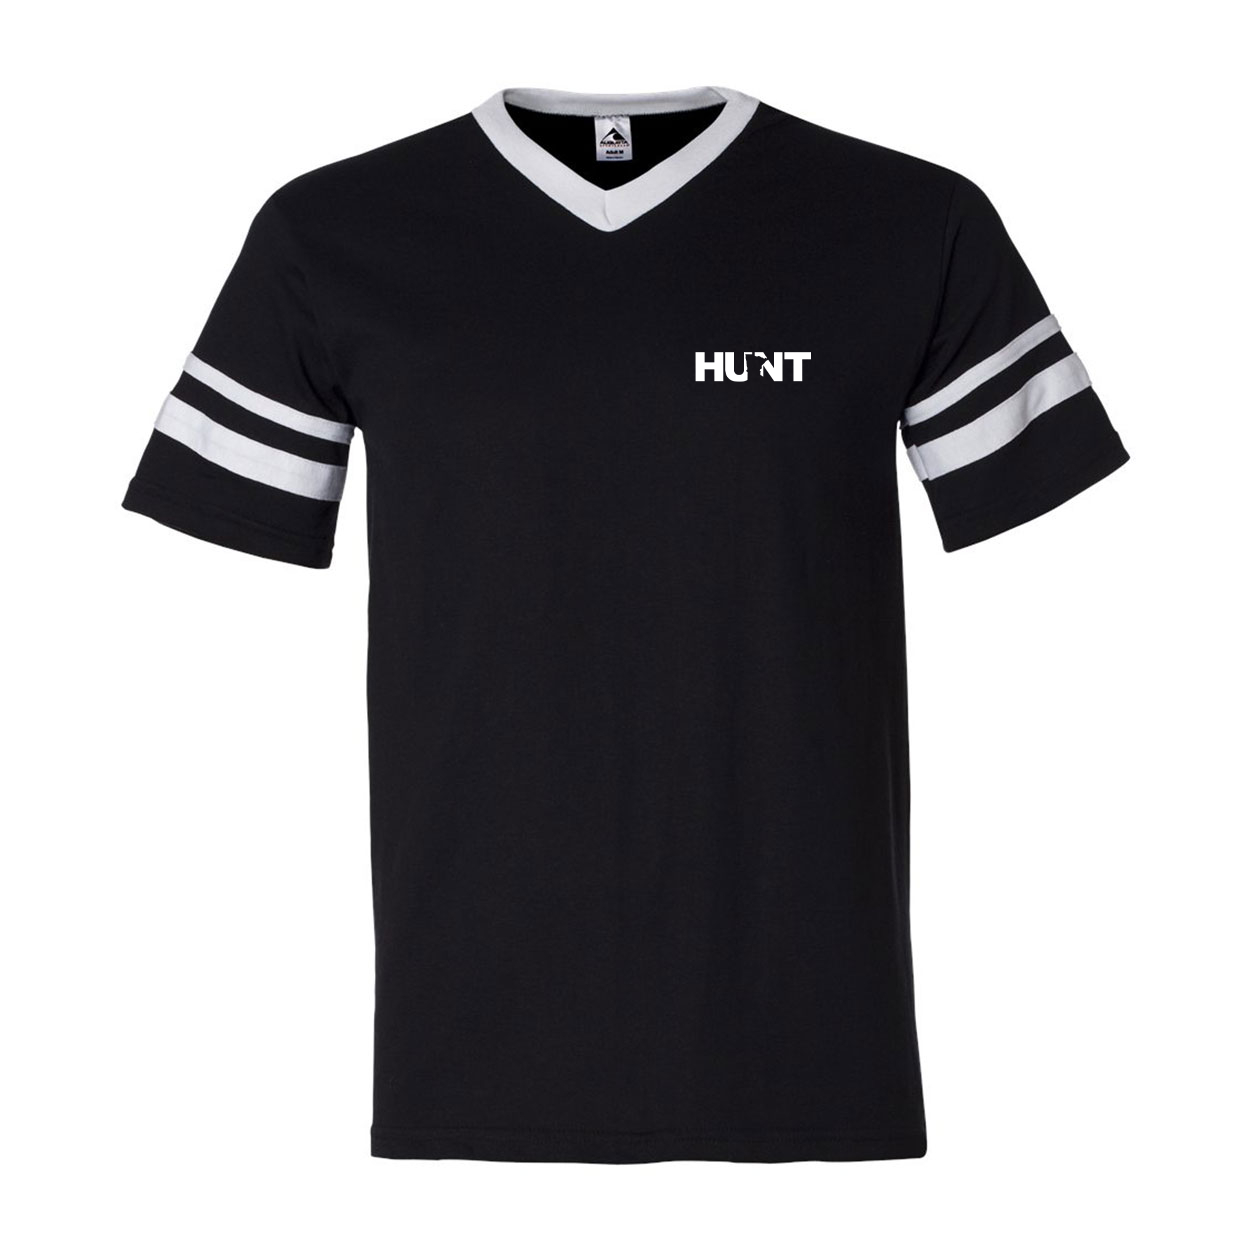 Hunt Minnesota Night Out Premium Striped Jersey T-Shirt Black/White (White Logo)